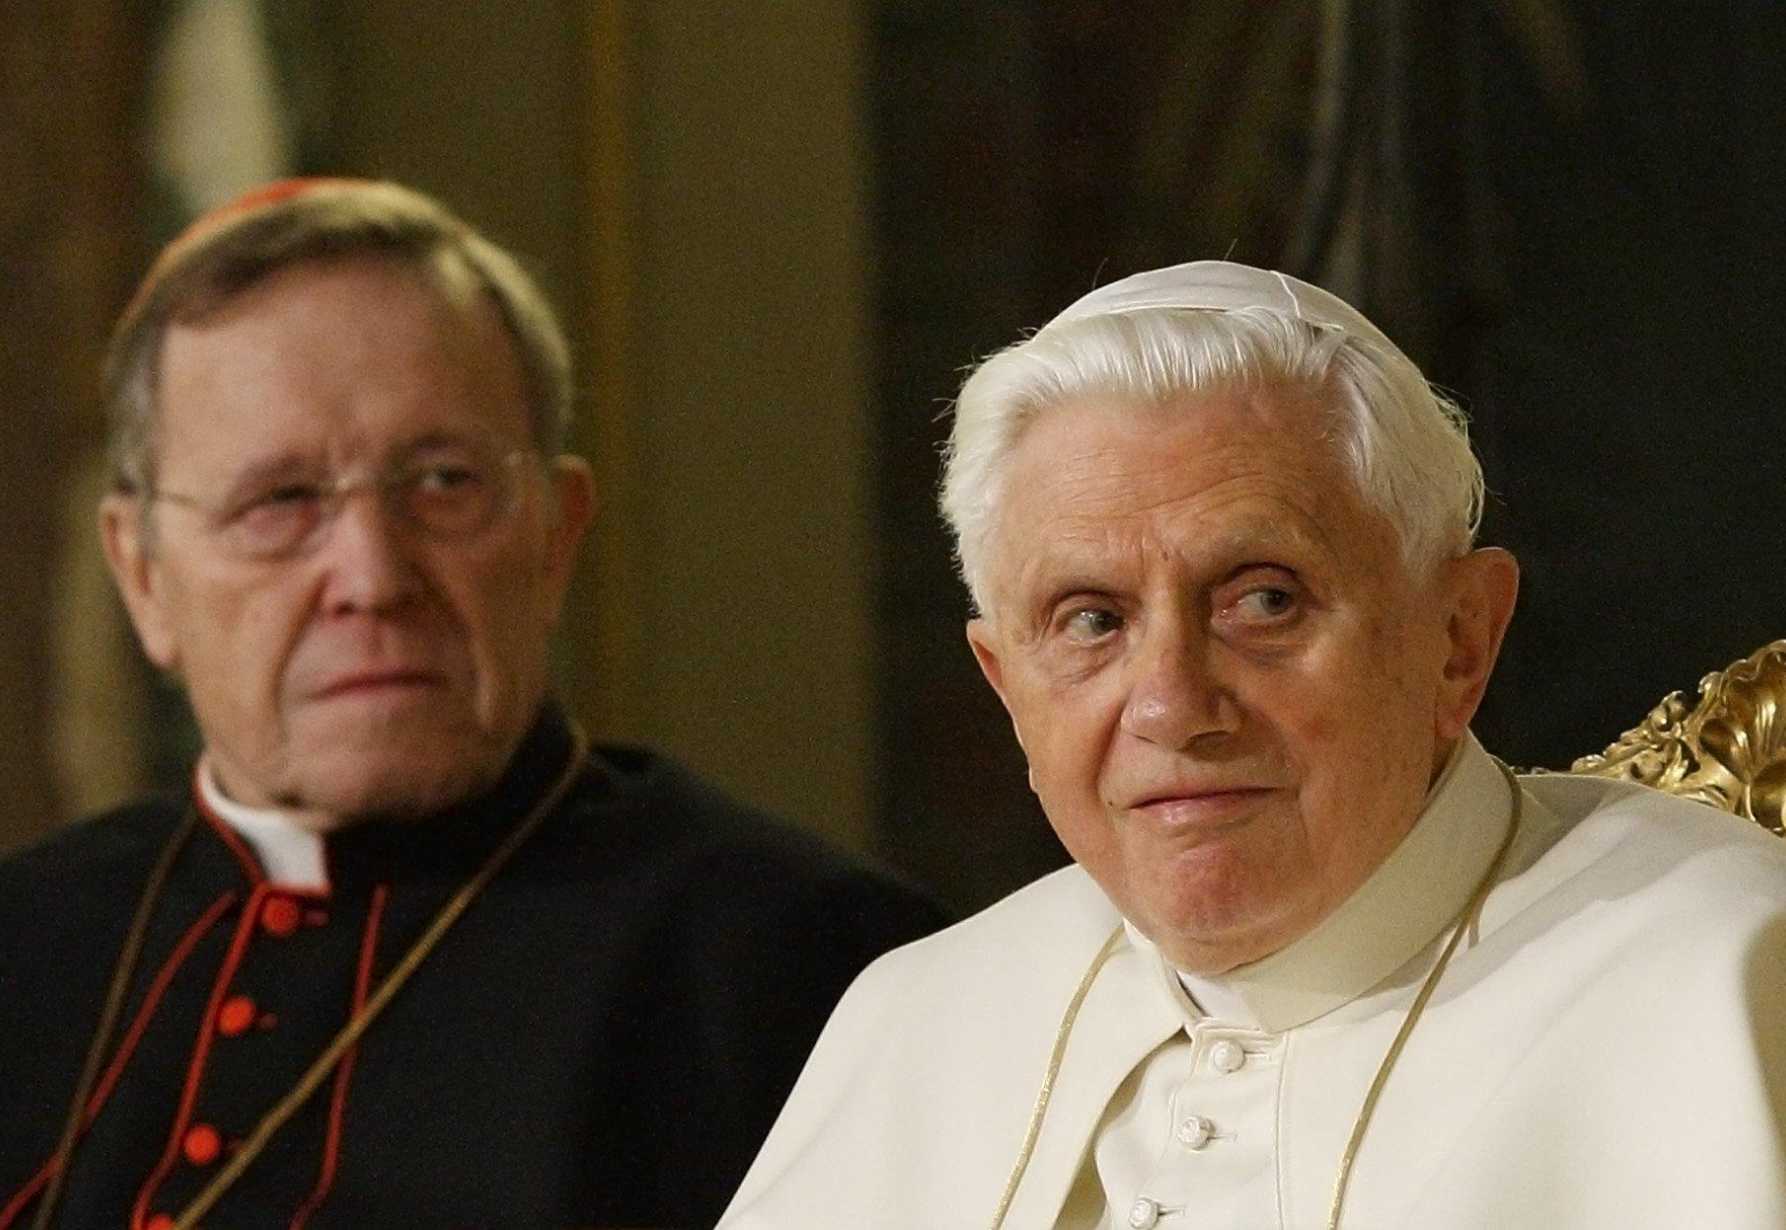 Pope Benedict's theological 'sparring partner' remembers 'enriching' debate